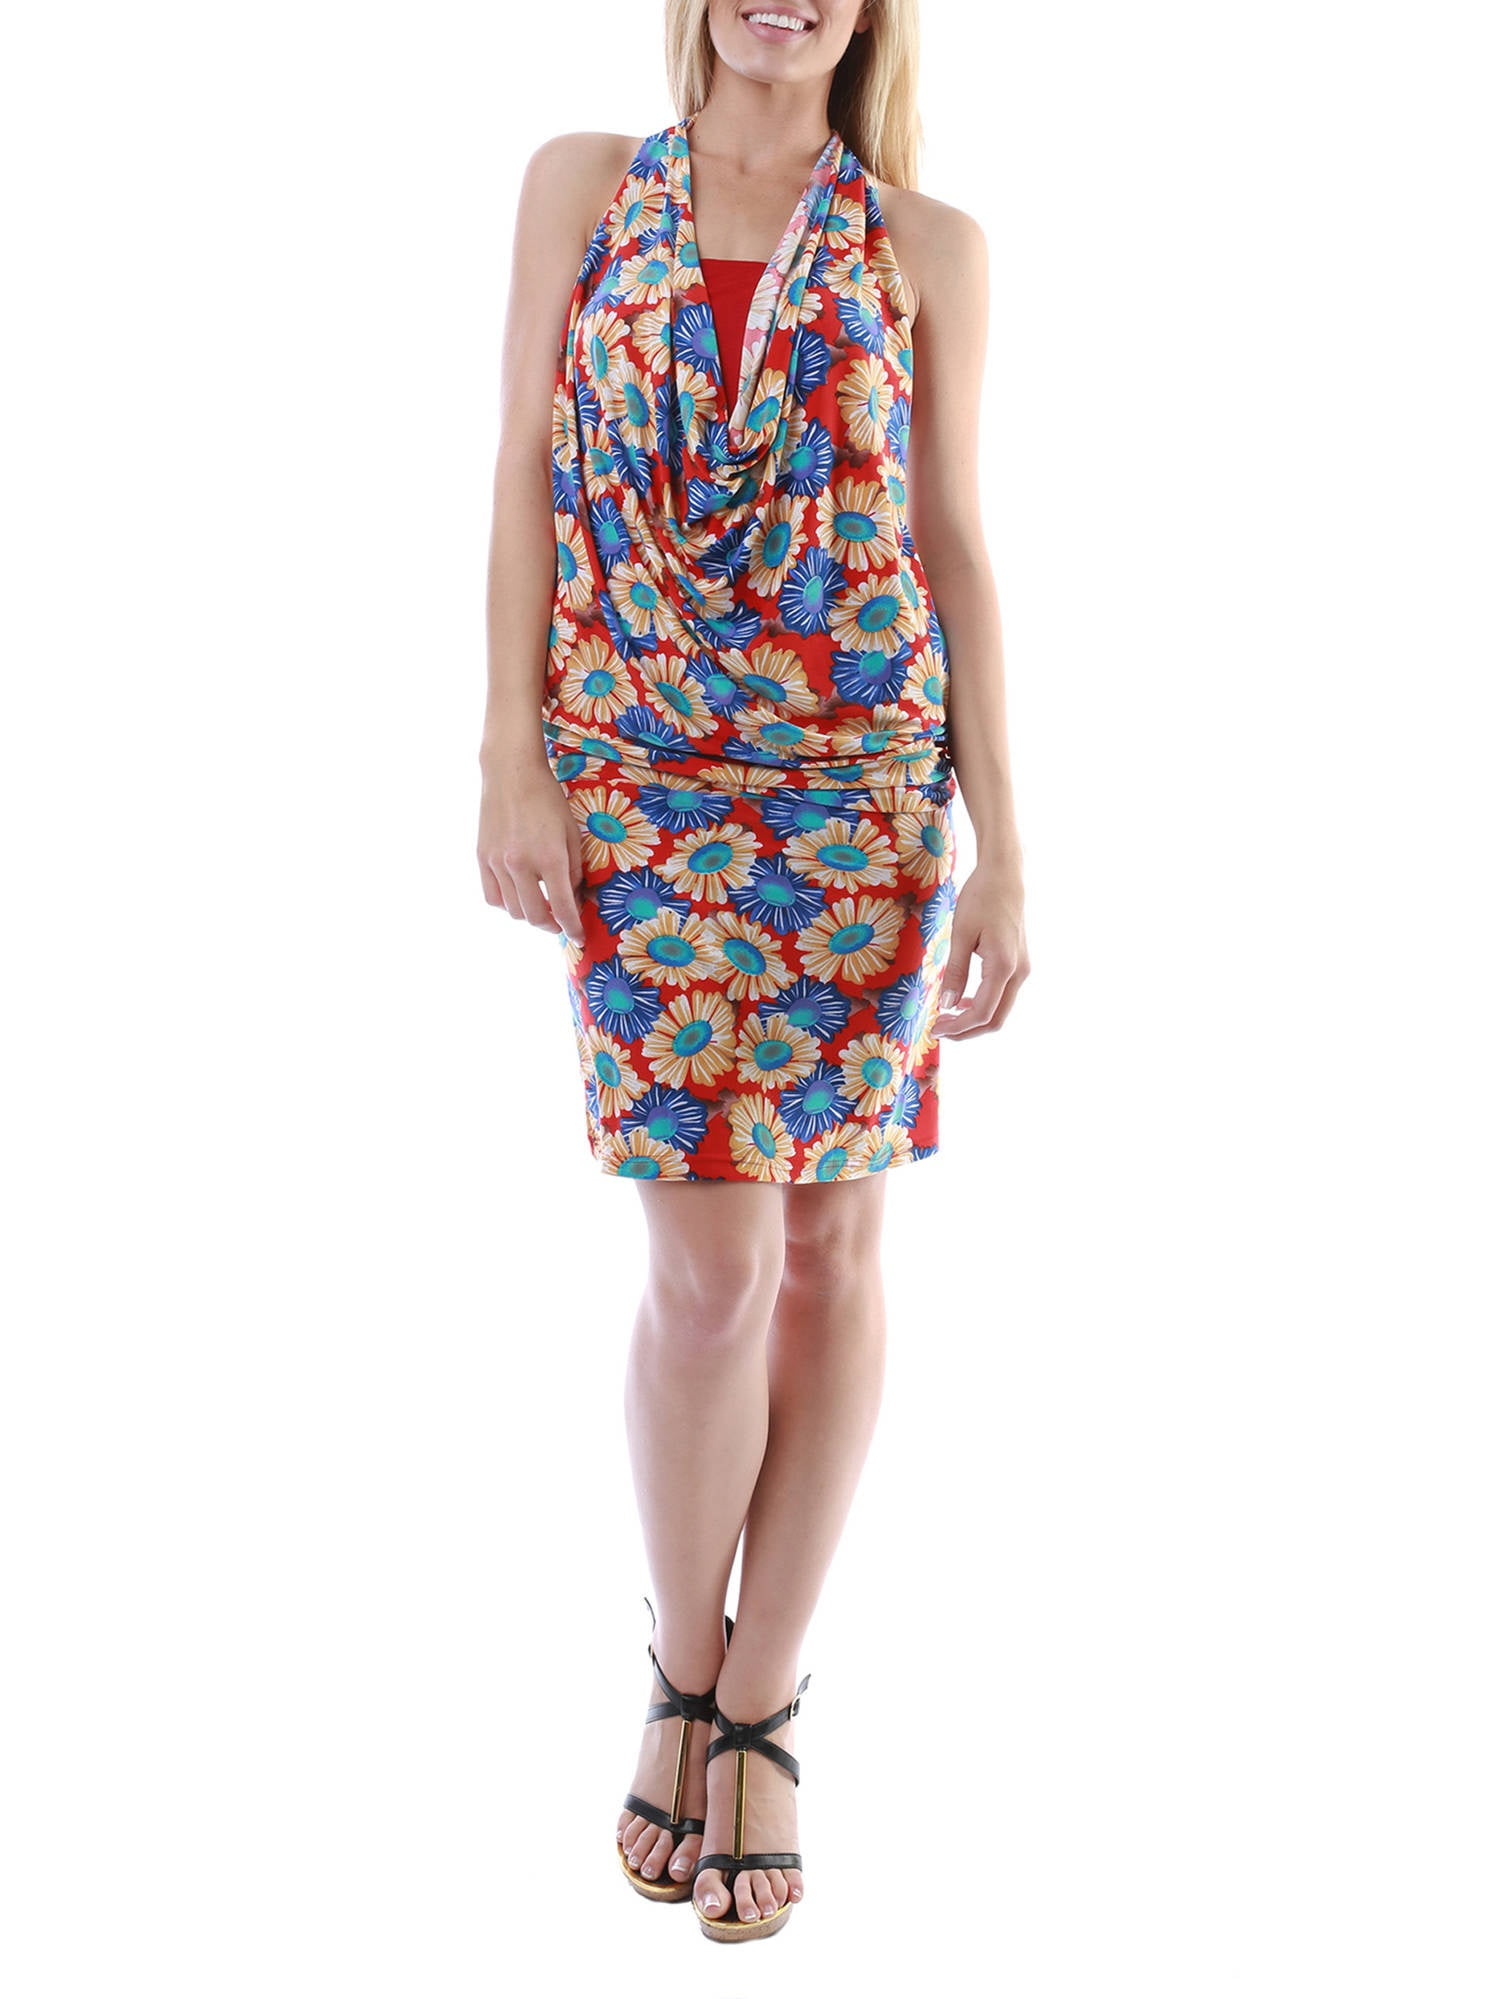 Women's Floral Fun Printed Halter Dress - Walmart.com